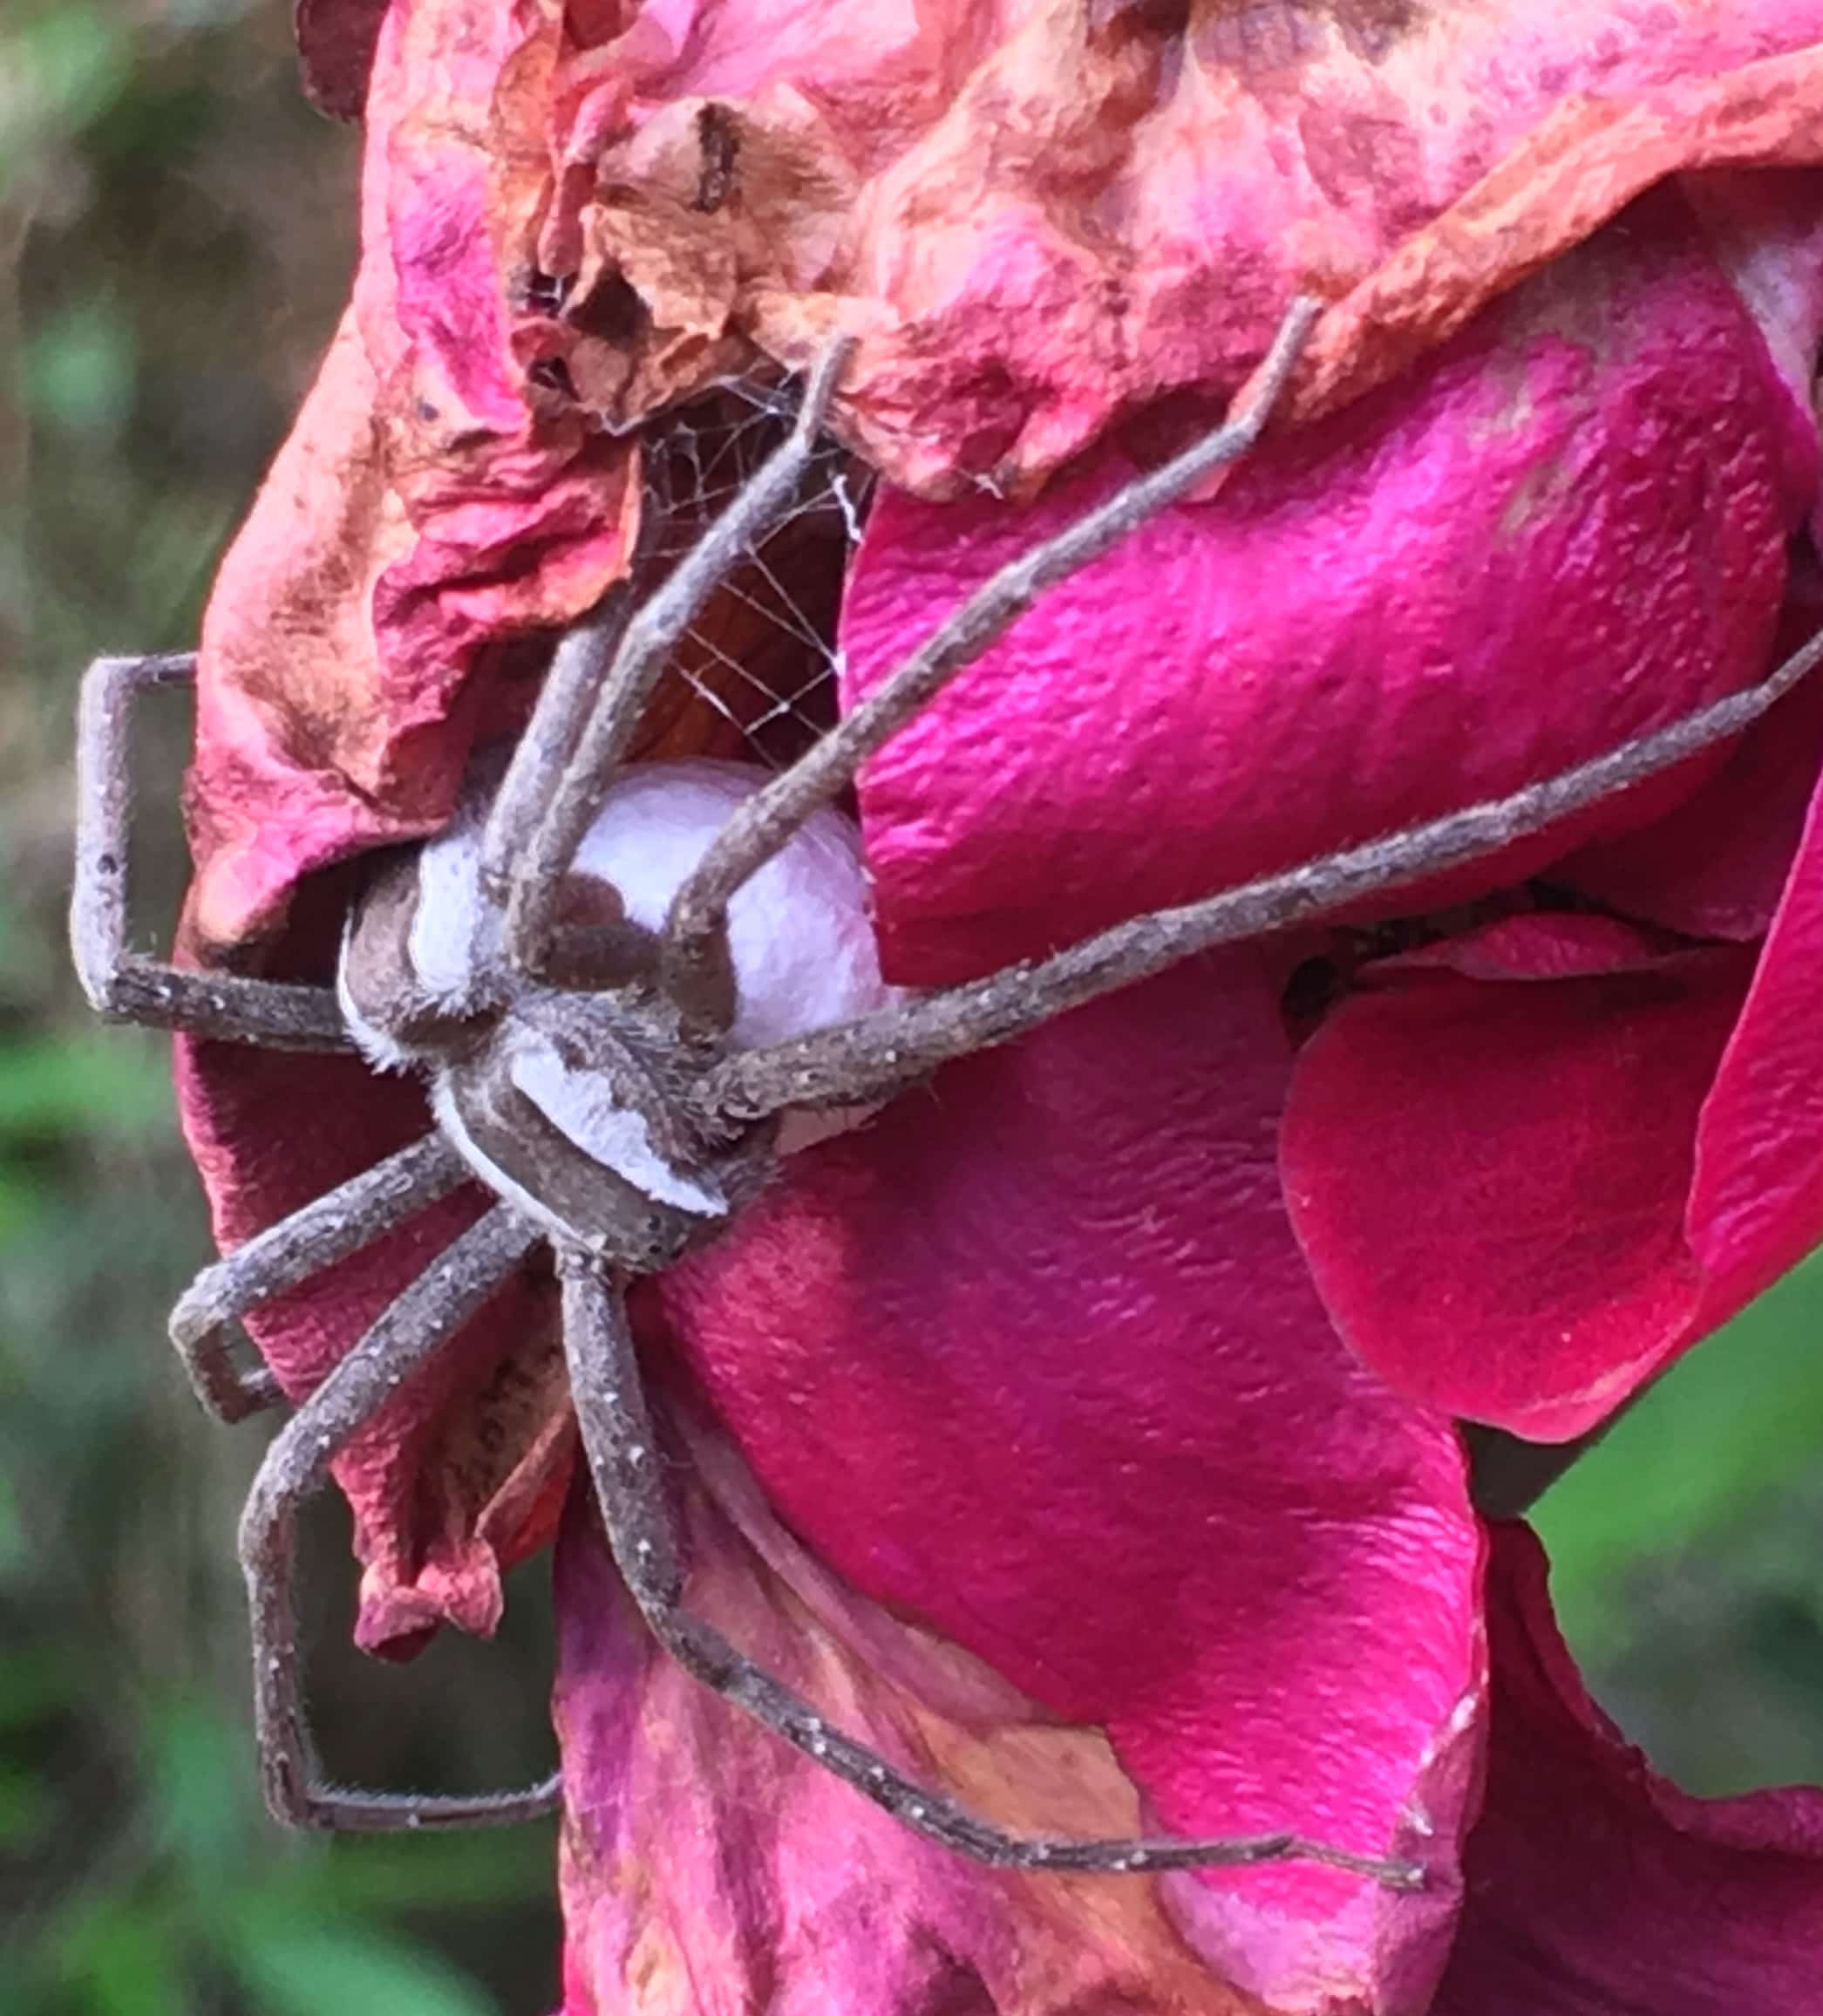 Picture of Pisaurina mira (Nursery Web Spider) - Female - Dorsal,Egg sacs